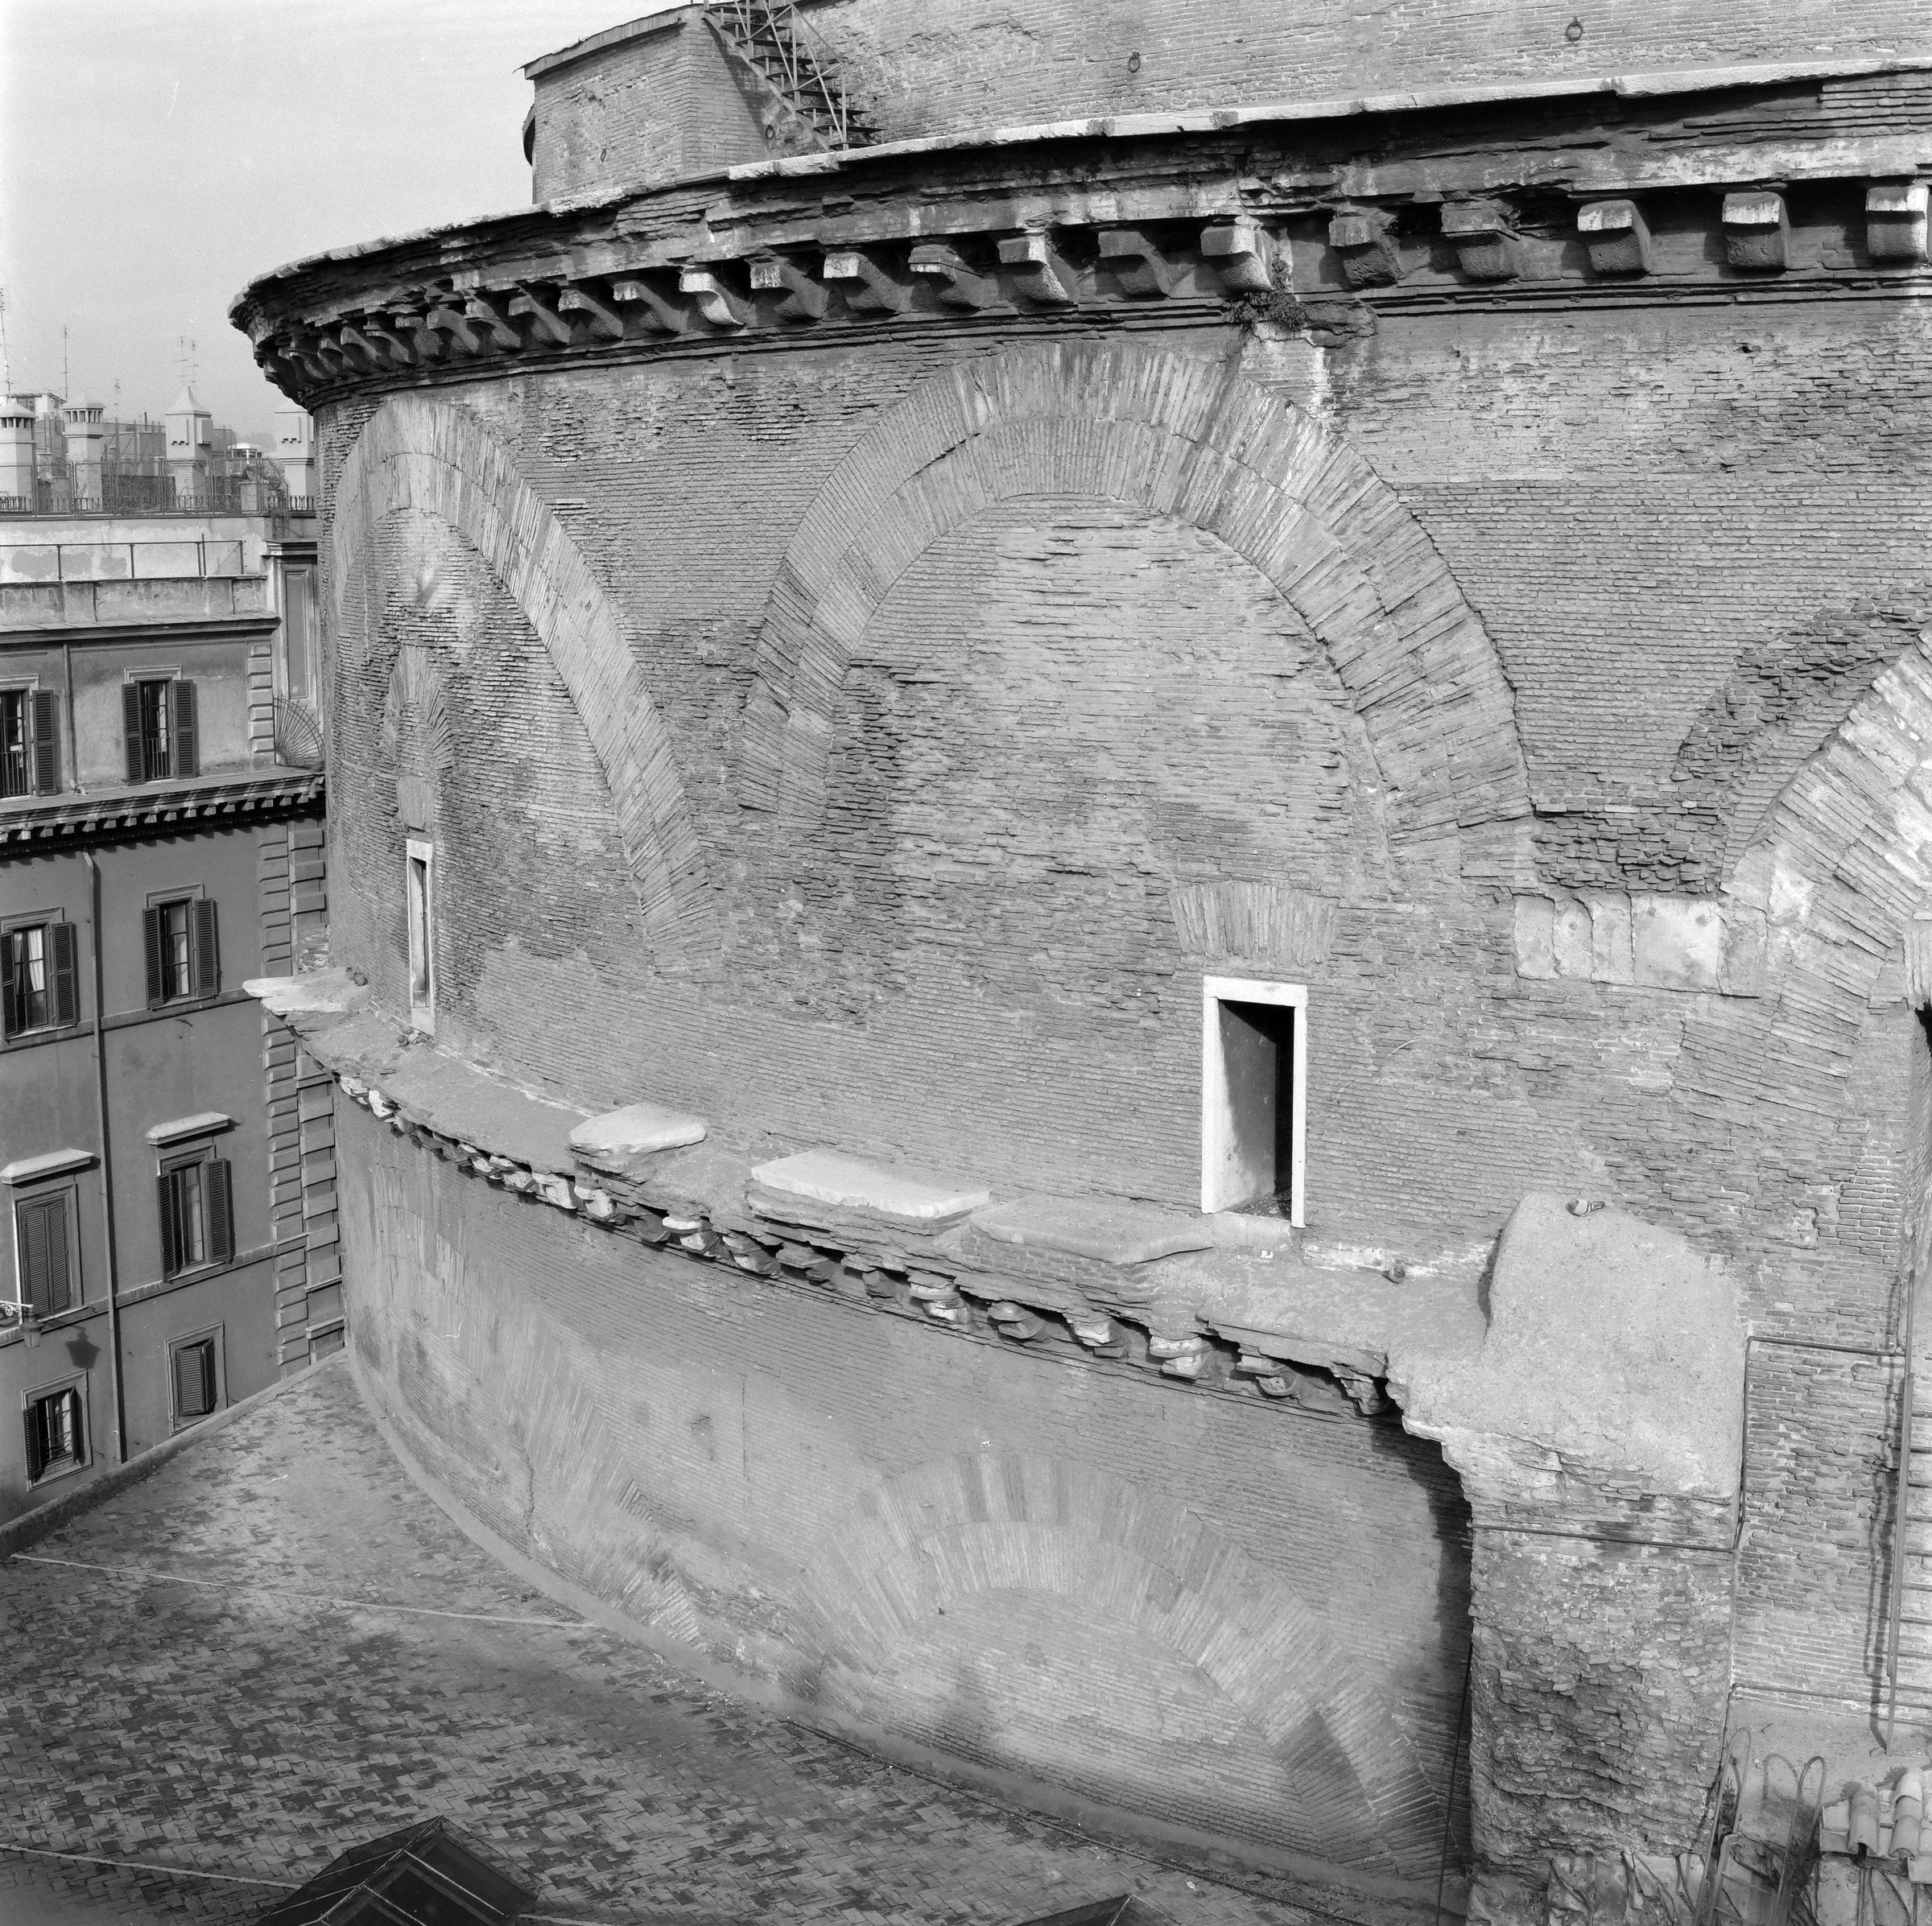 Fotografo non identificato, Pantheon; Pantheon (Chiesa di S. Maria ad Martyres), 1951-2000, gelatina ai sali d'argento, 6x6 cm, N078730